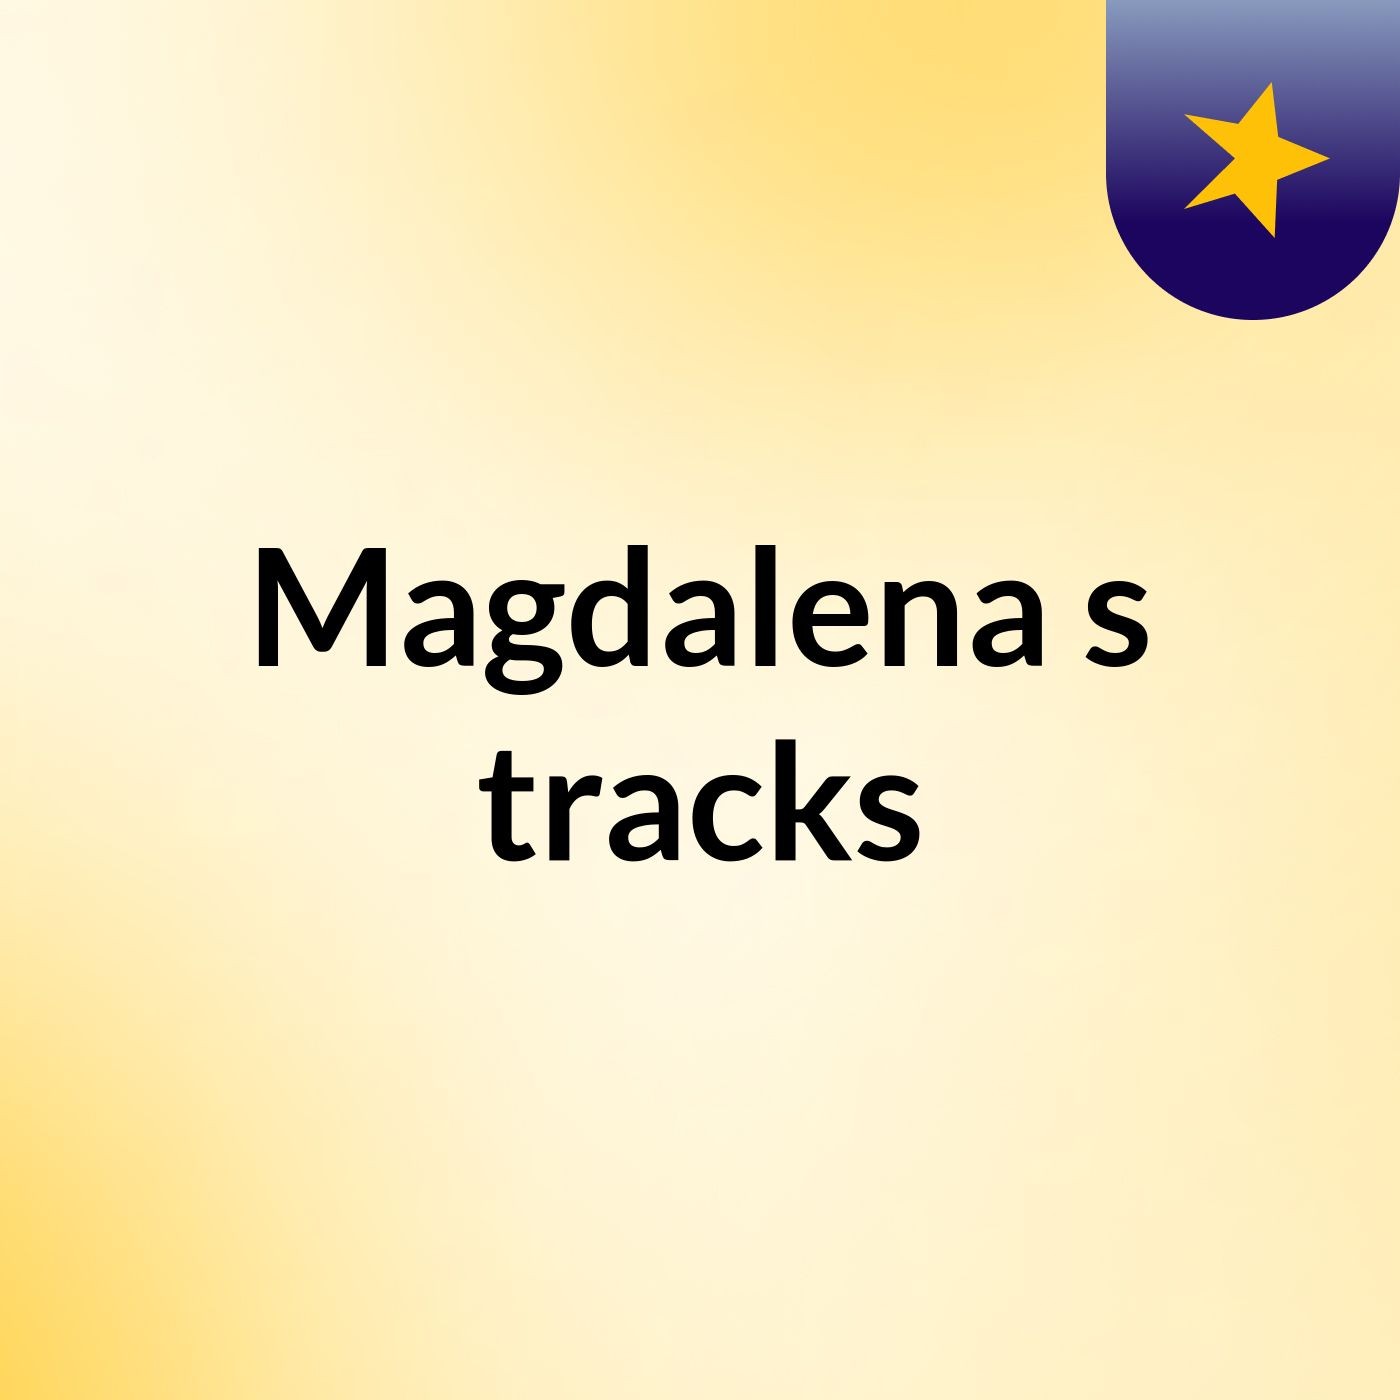 Magdalena's tracks